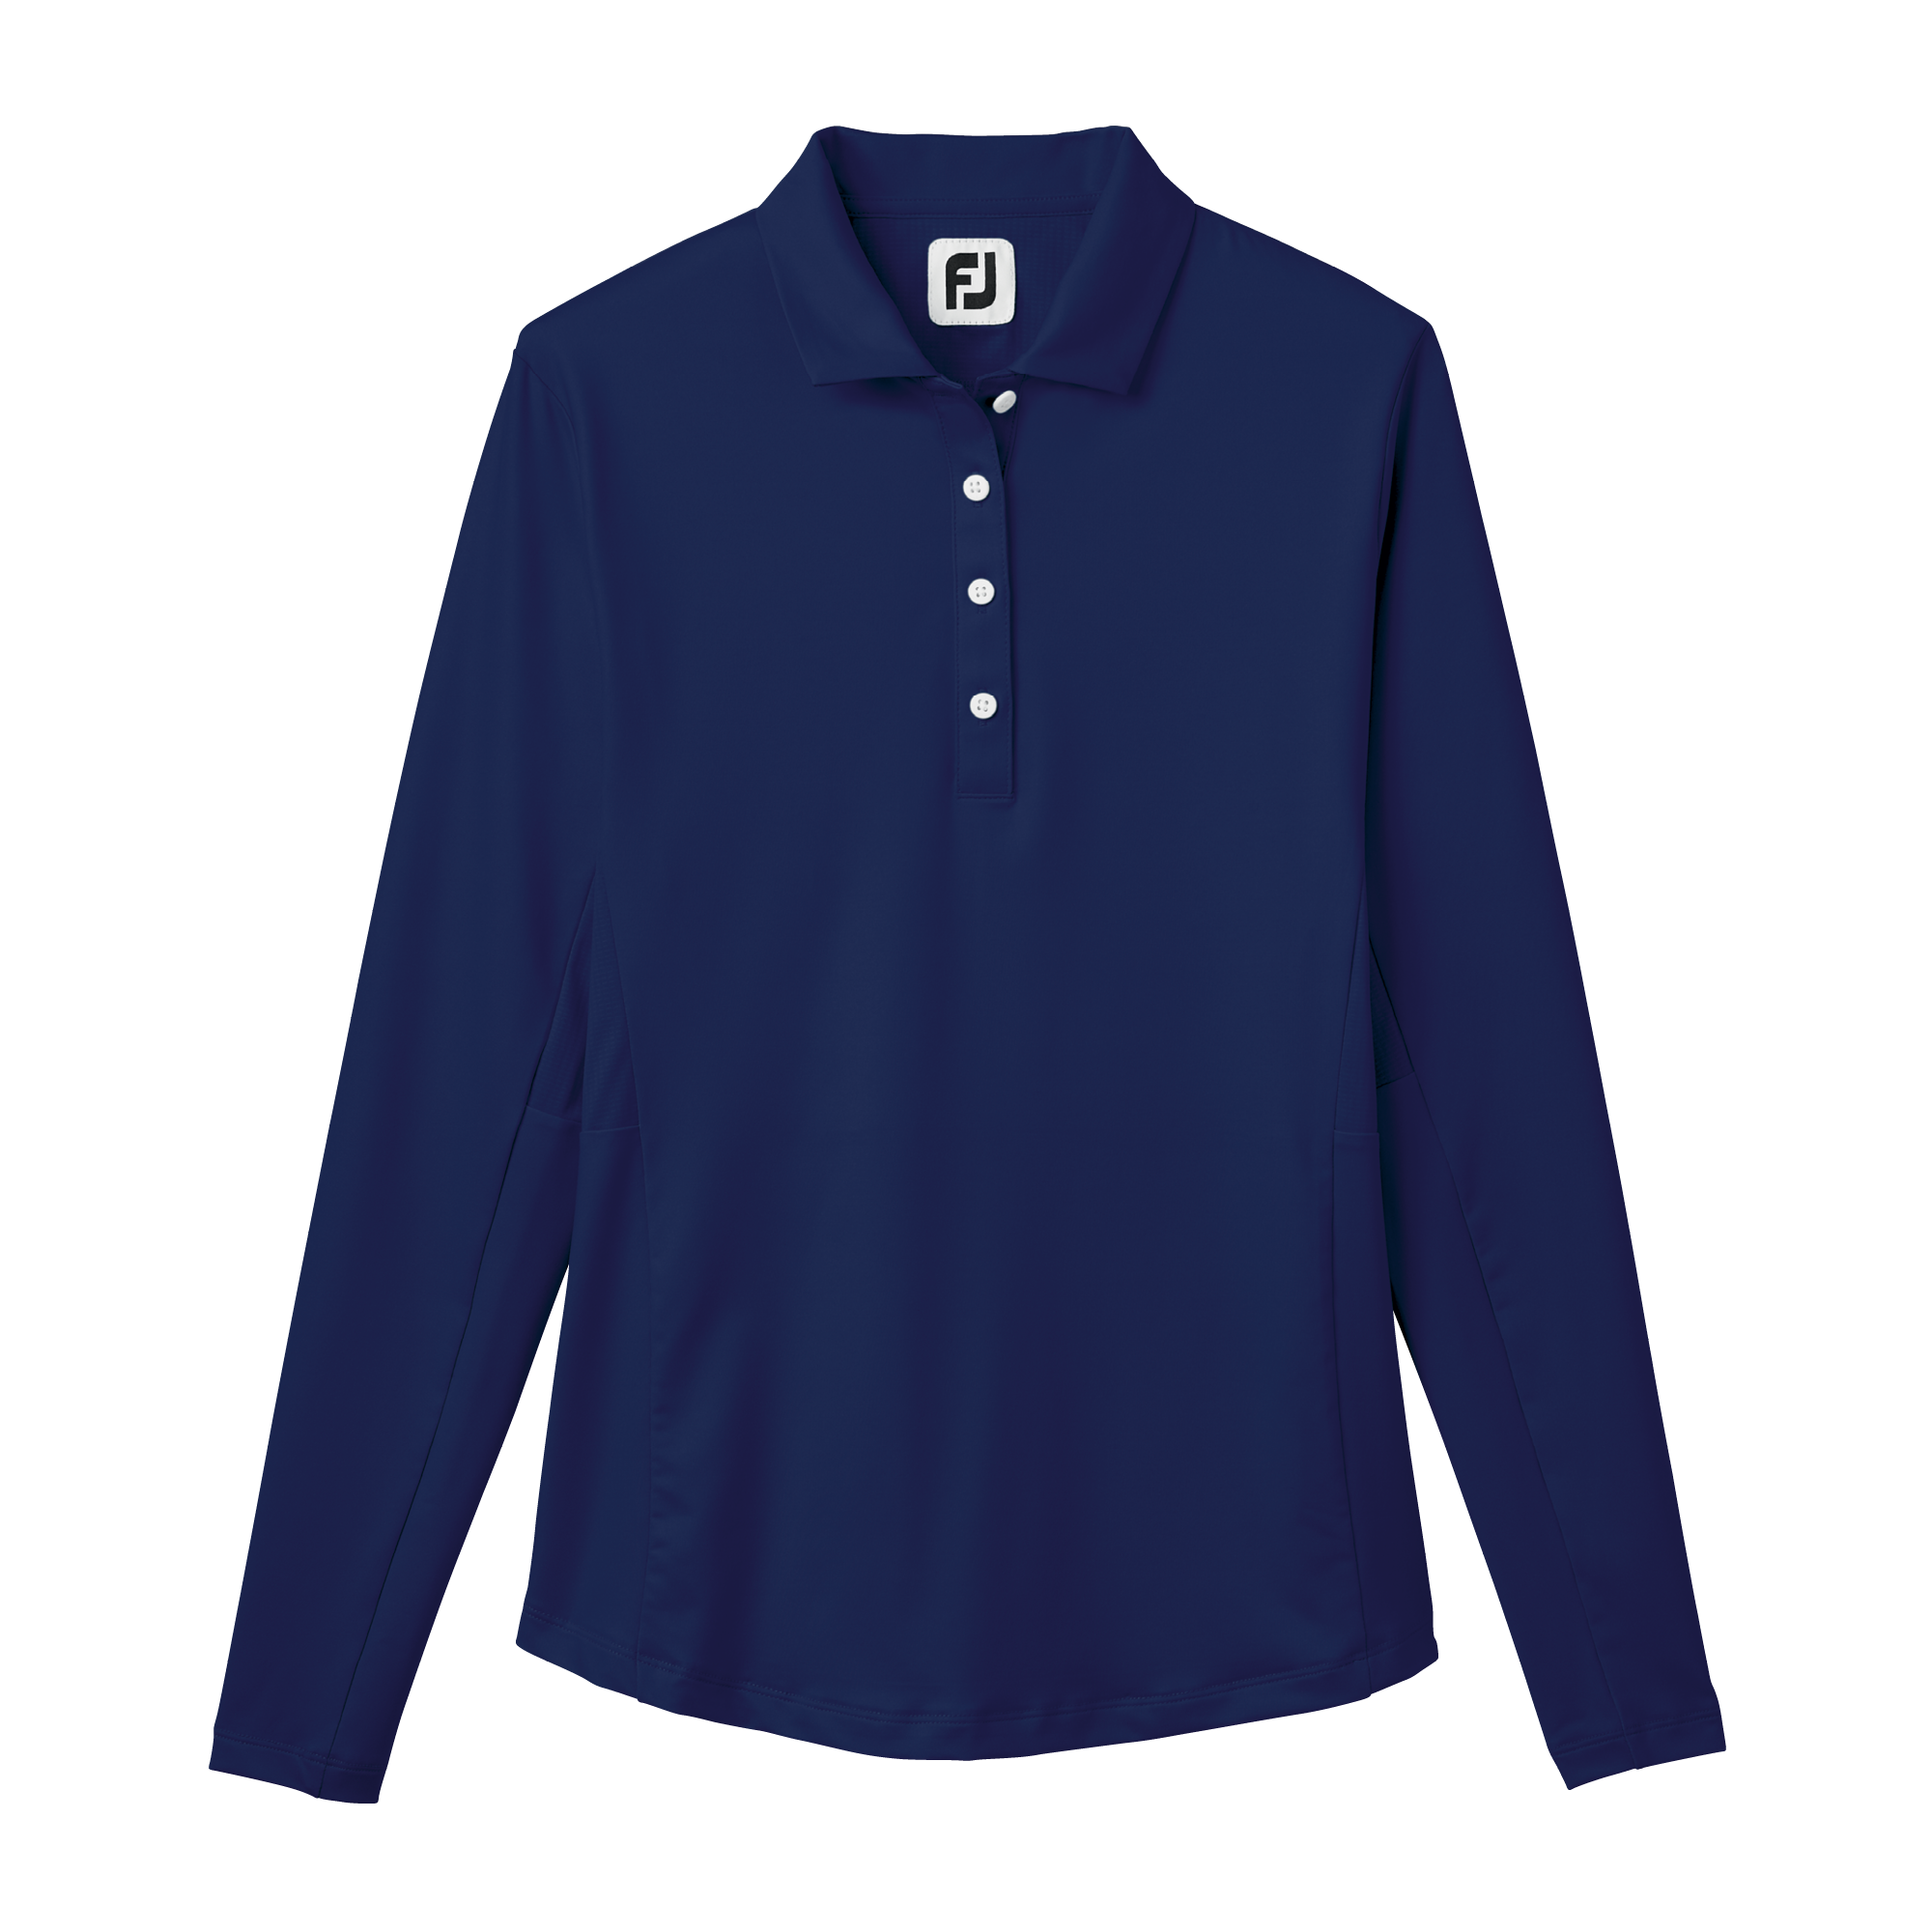 FootJoy Long Sleeve Solid Jersey Shirt